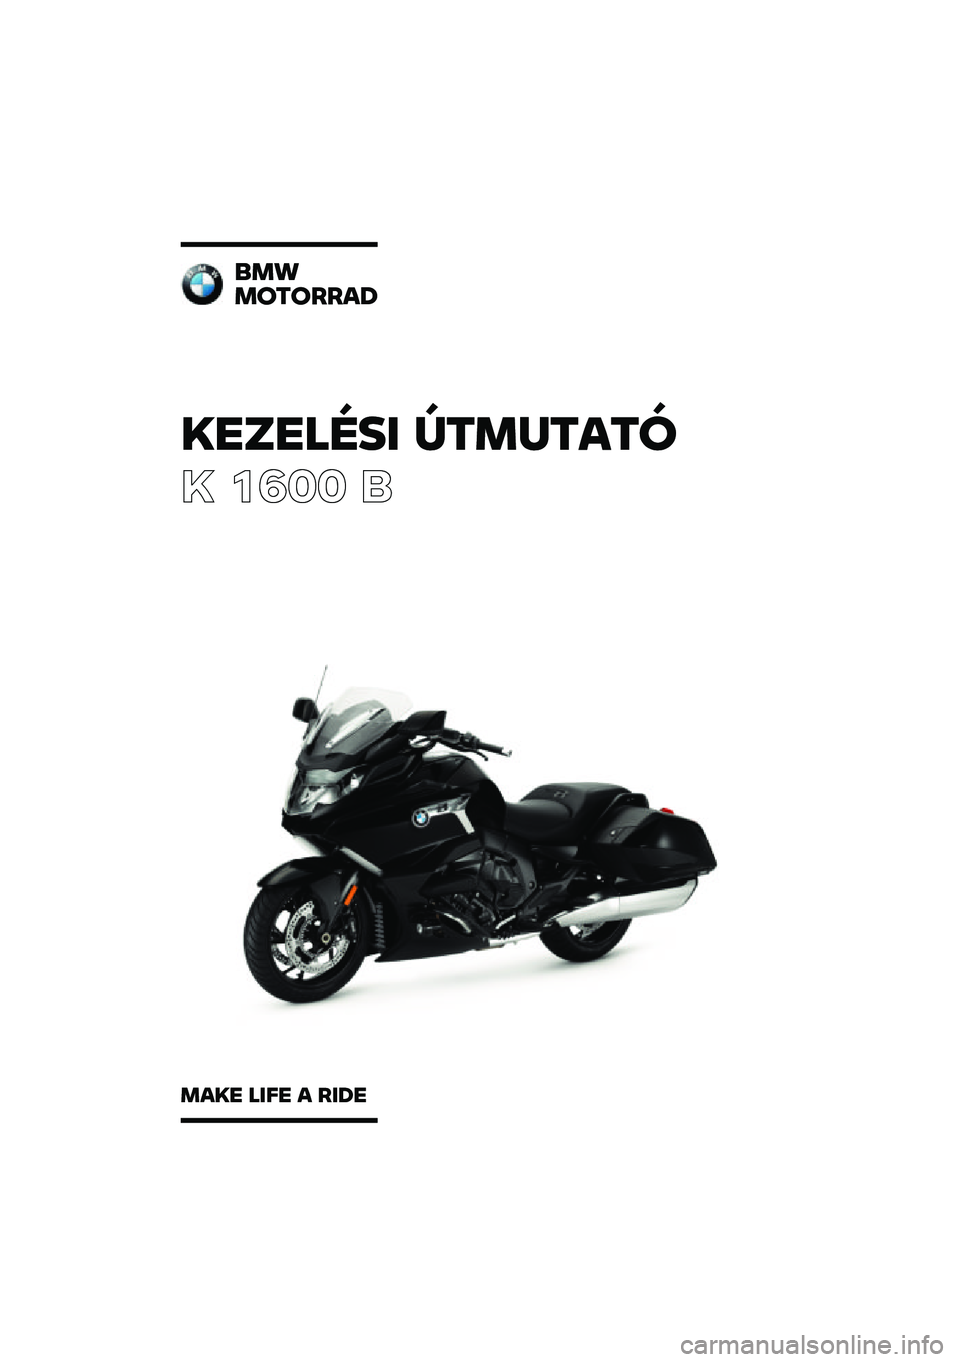 BMW MOTORRAD K 1600 B 2020  Kezelési útmutató (in Hungarian) �������\b�	 �
�\f�
��\f��\f�
� ���� �	
��
�
�
��\f�����
�
��� ��	�� � ��	�� 